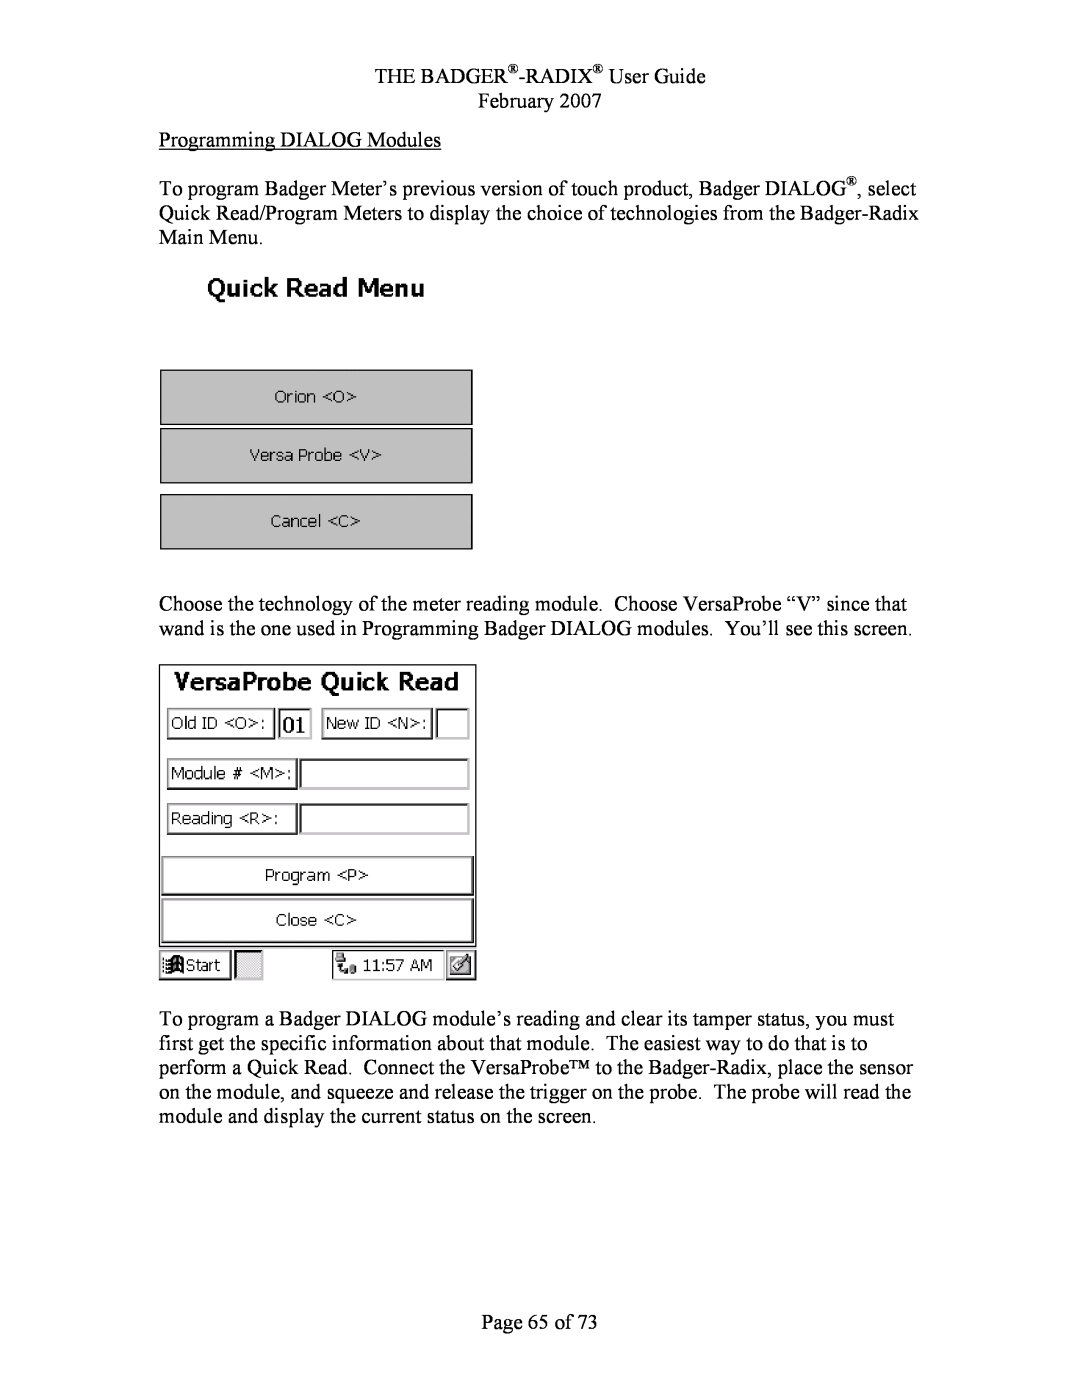 Badger Basket N64944-001, RAD-IOM-01 THE BADGER-RADIX User Guide February Programming DIALOG Modules, Page 65 of 